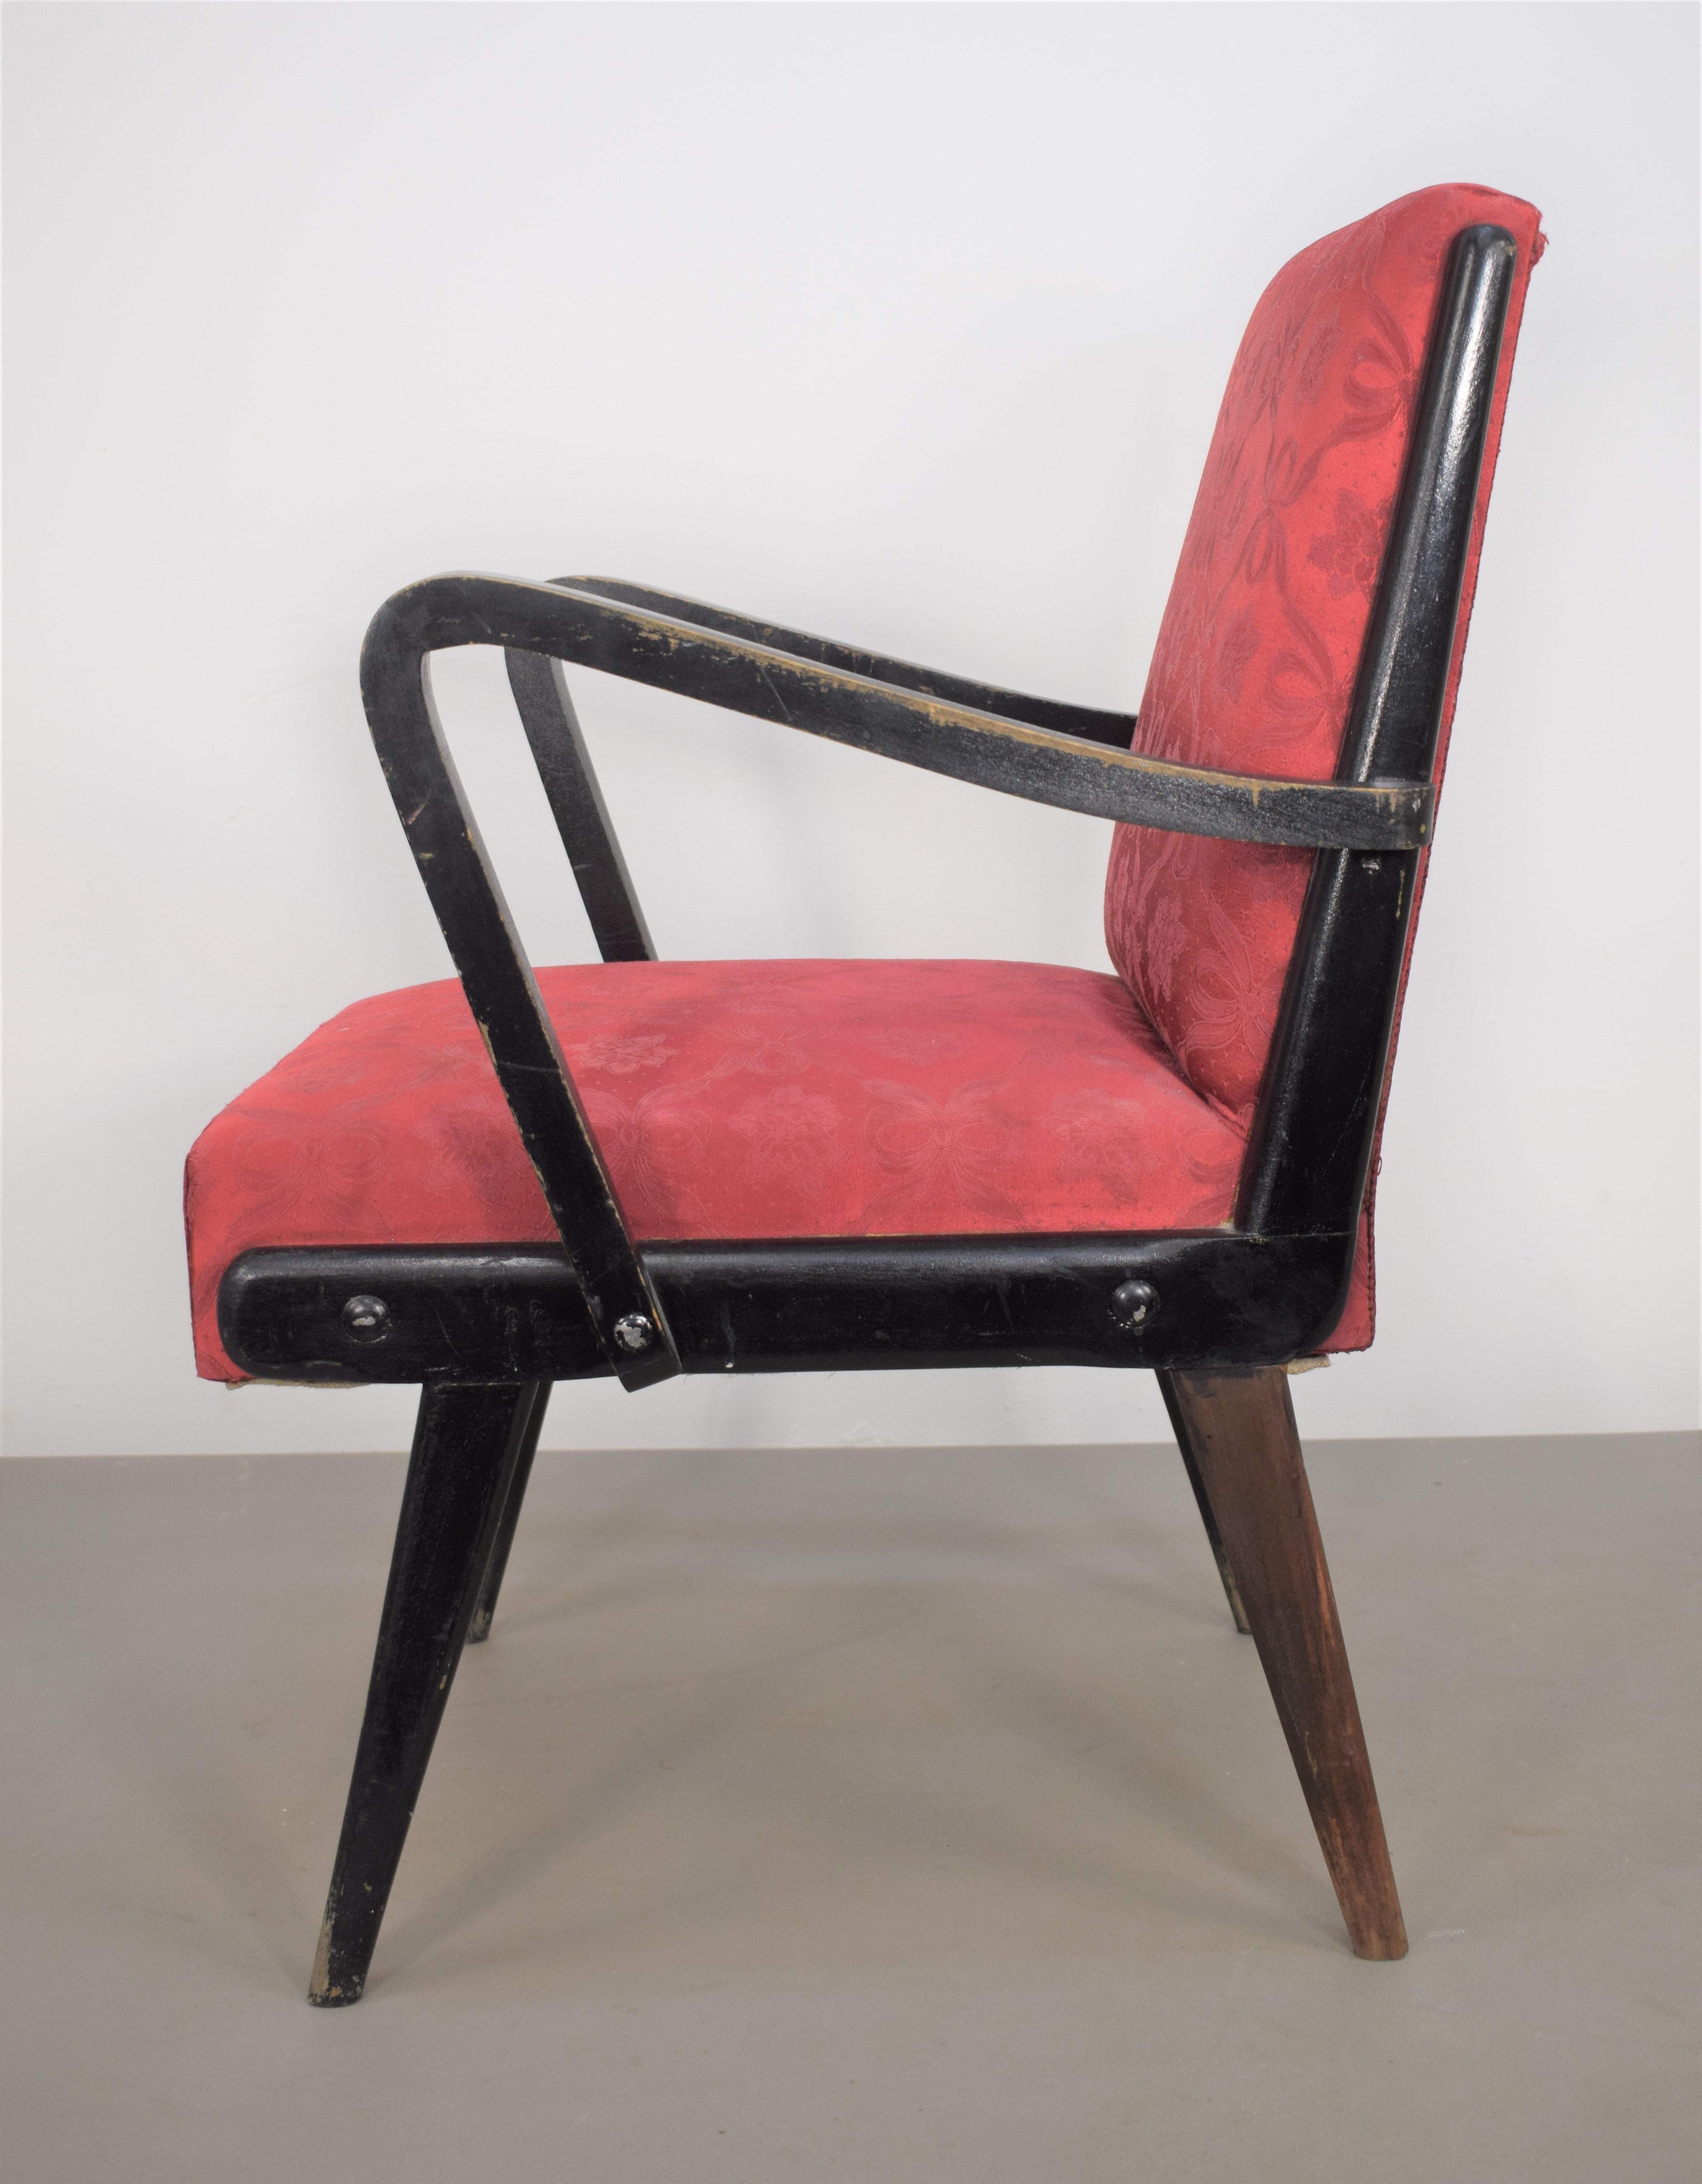 Italian armchairs, 1940s.

Dimensions: H= 80 cm; W= 57cm; D= 60 cm; Height seat= 41 cm.